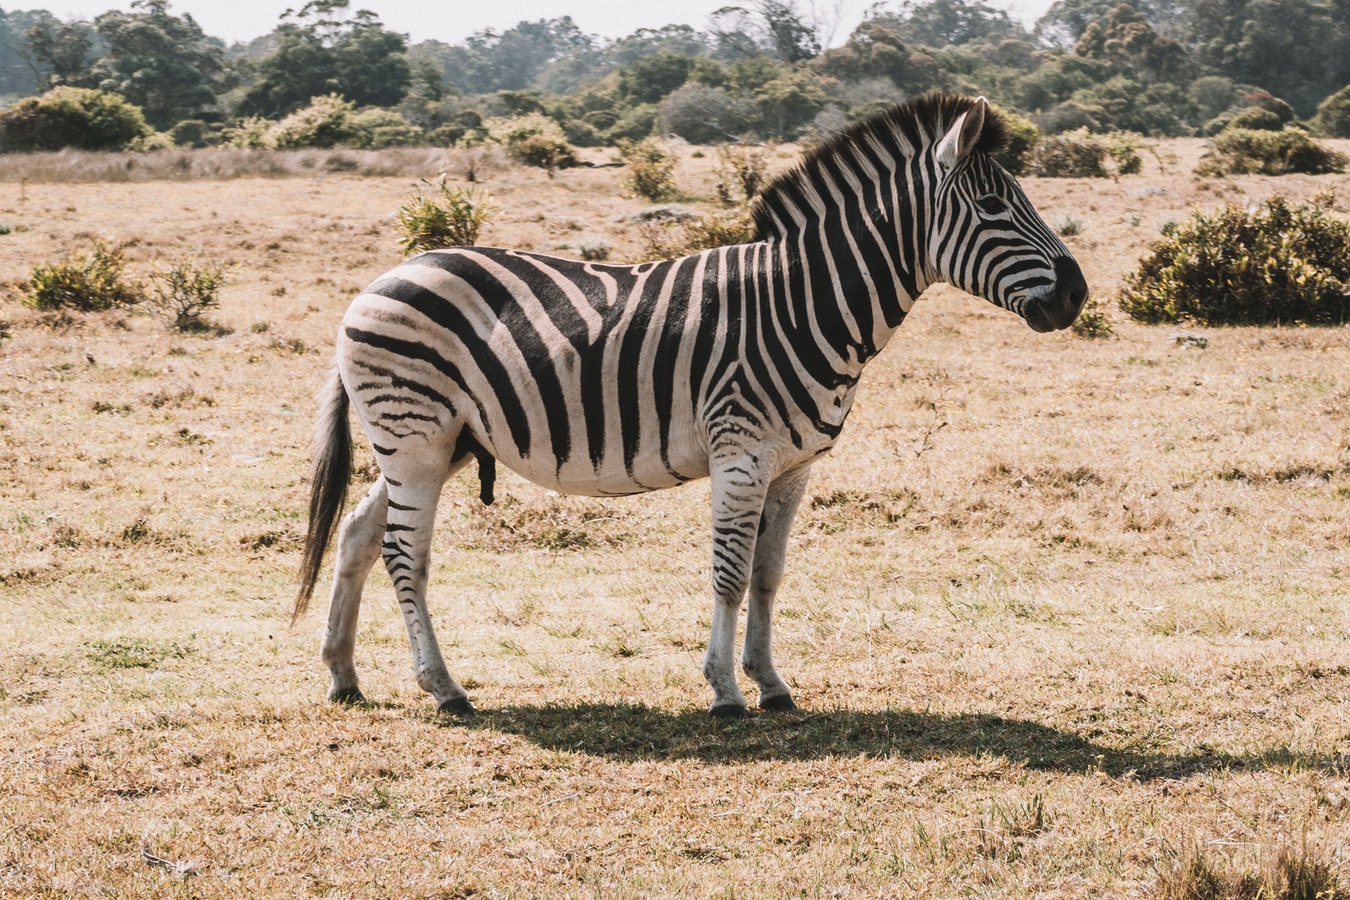 Zebra - Description, Habitat, Image, Diet, and Interesting Facts